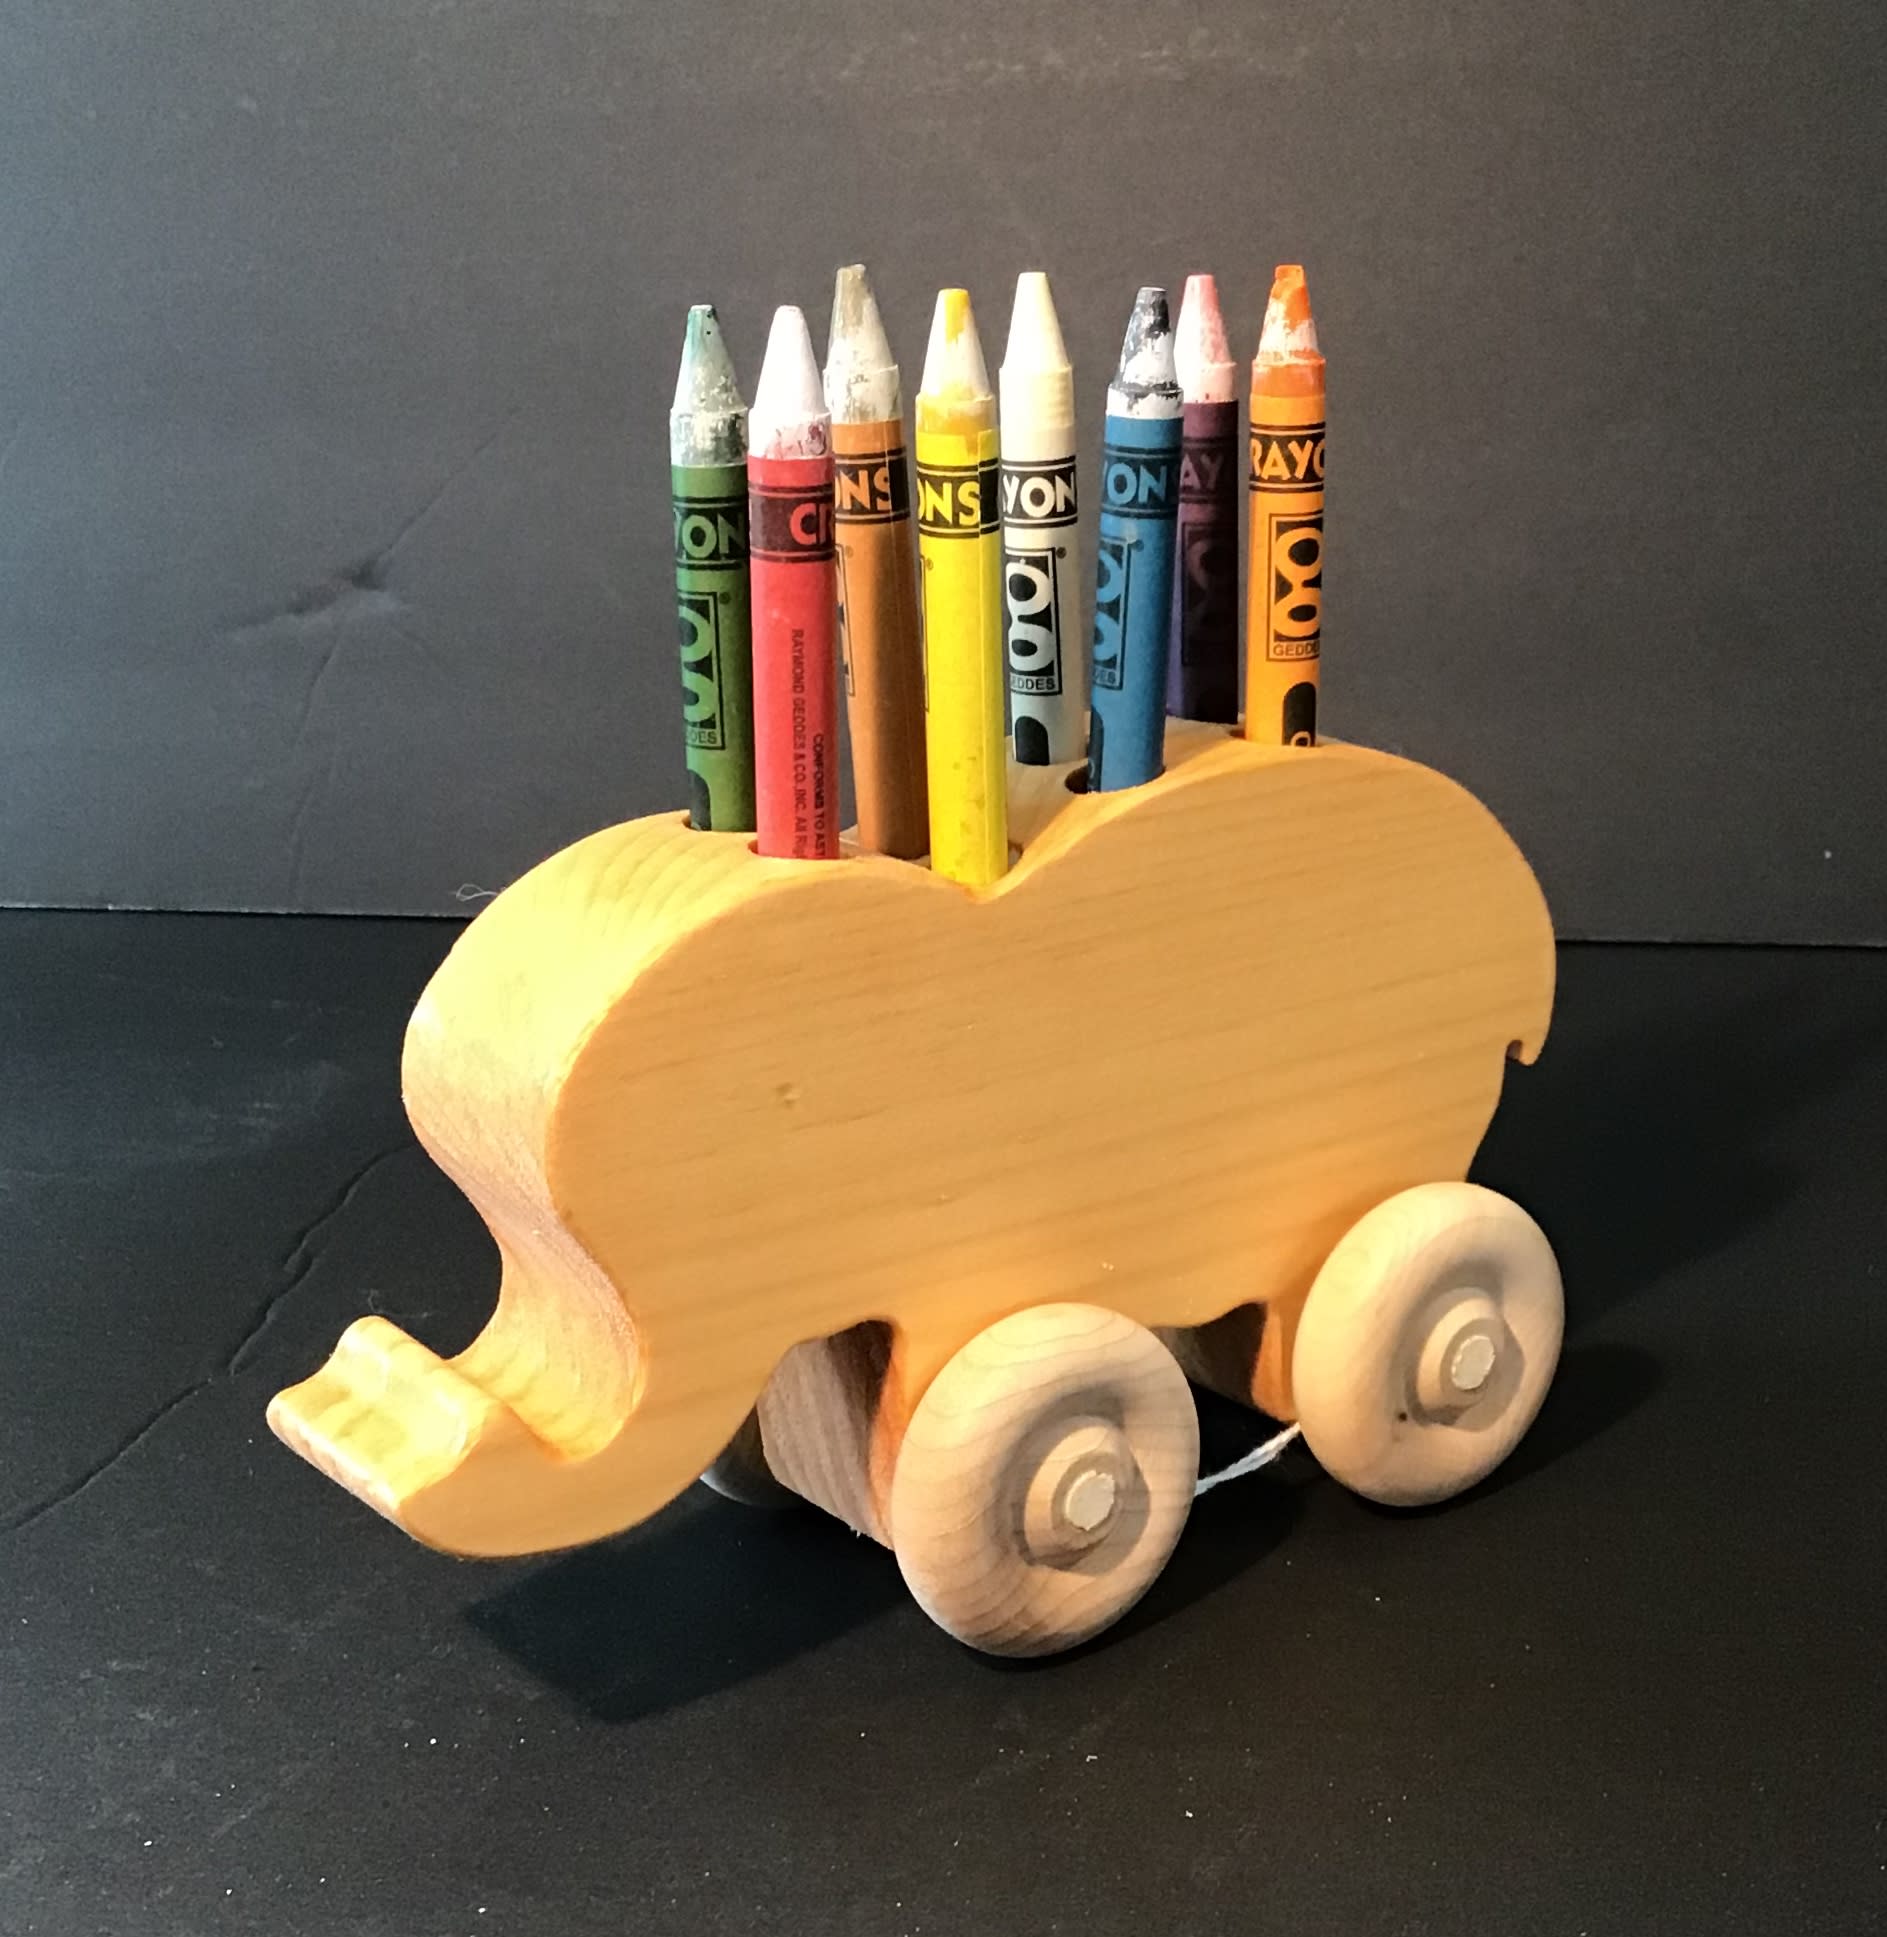 Elephant crayon holder - Toys- crayon holders - Barretts' Unique